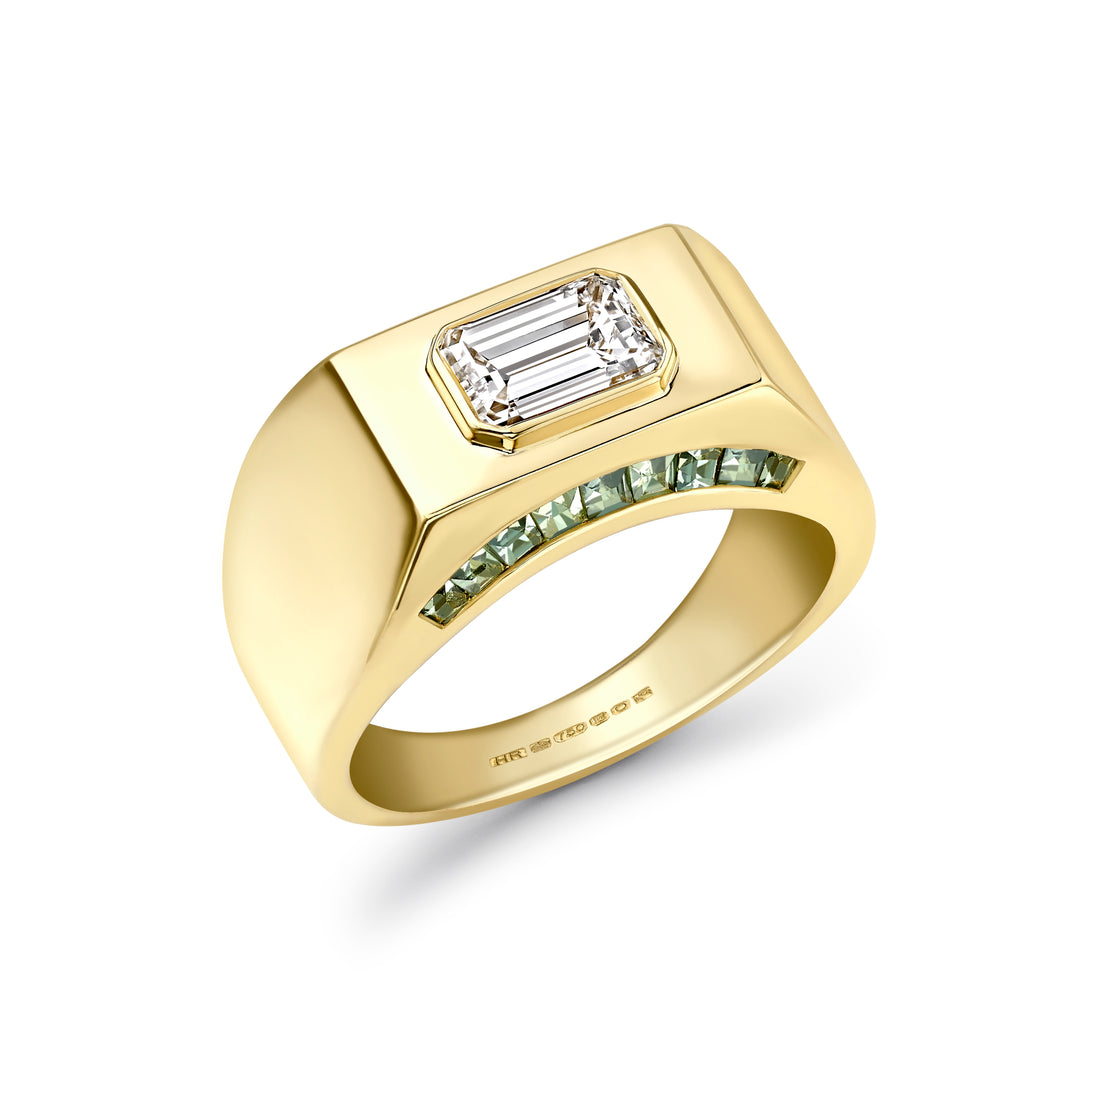  Emerald Cut Diamond & Green Sapphire Ring by Hattie Rickards | The Cut London